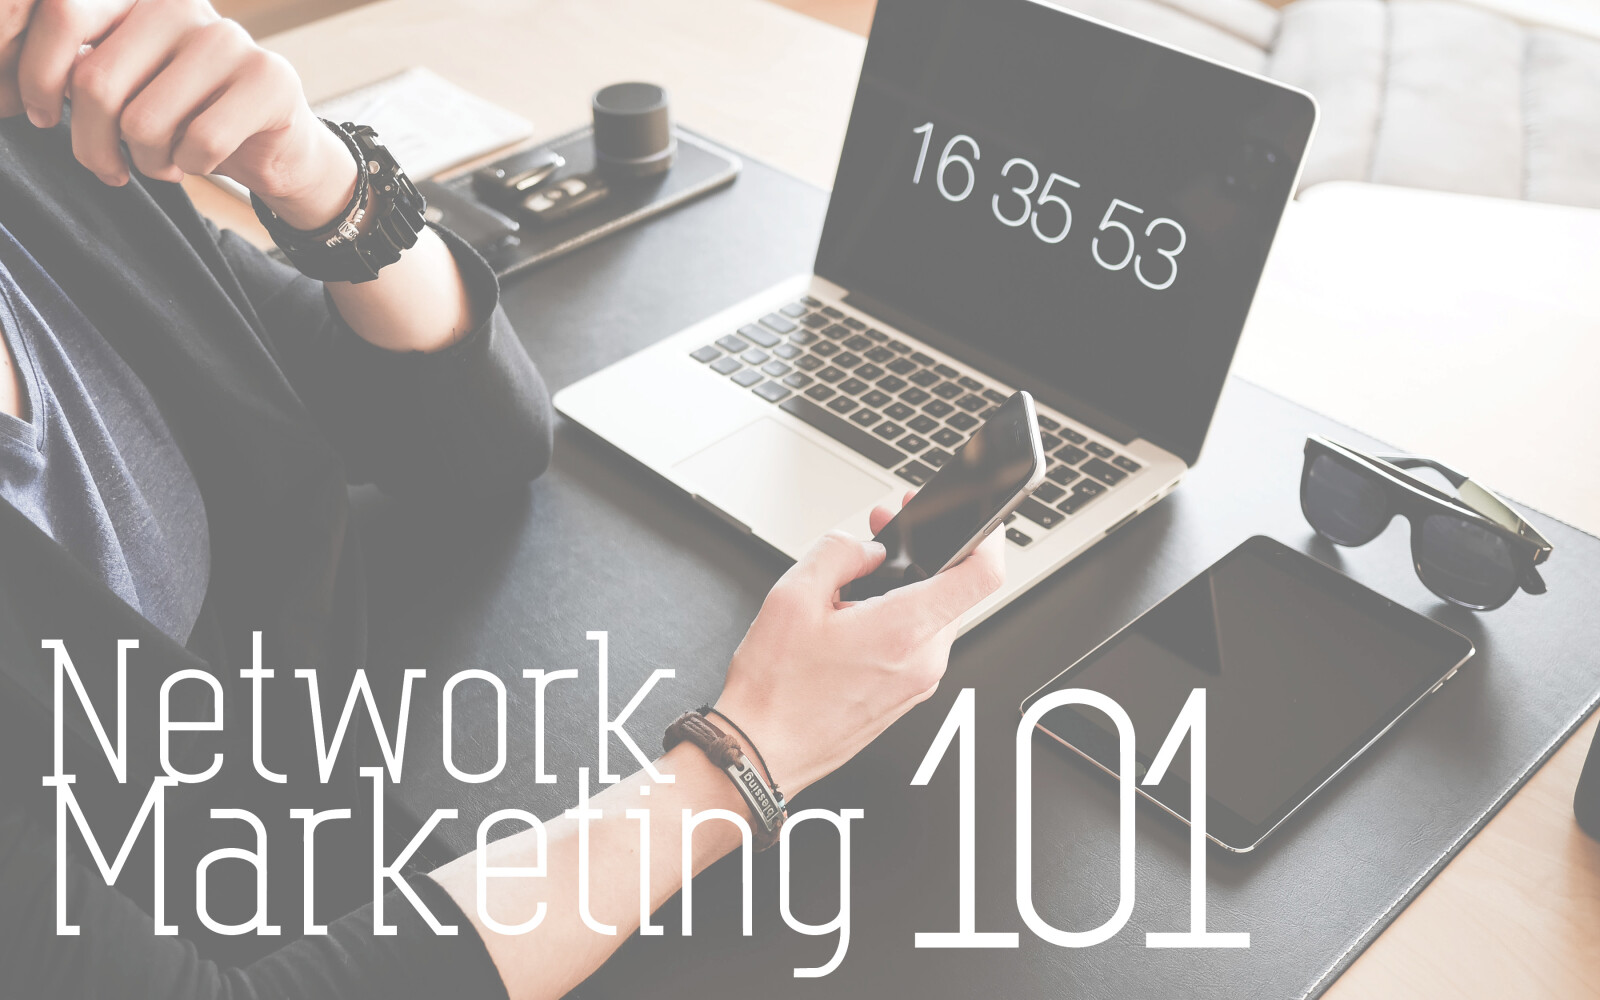 Network Marketing 101